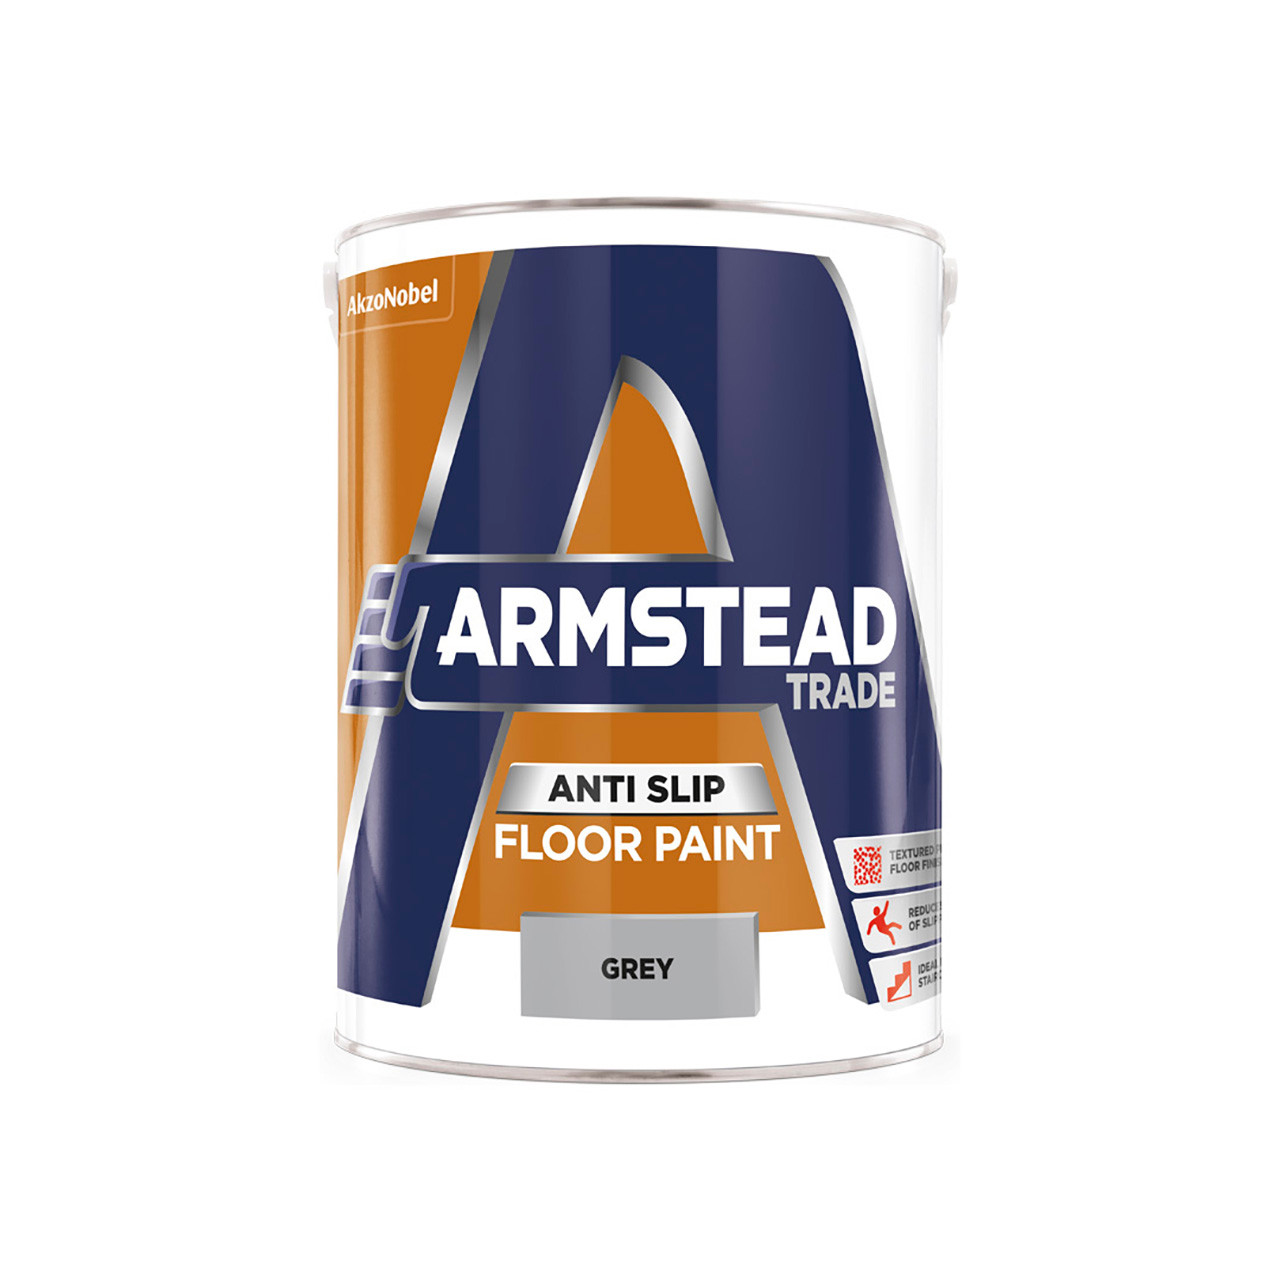 Photograph of Armstead Trade Anti-Slip Floor Paint Grey 5L